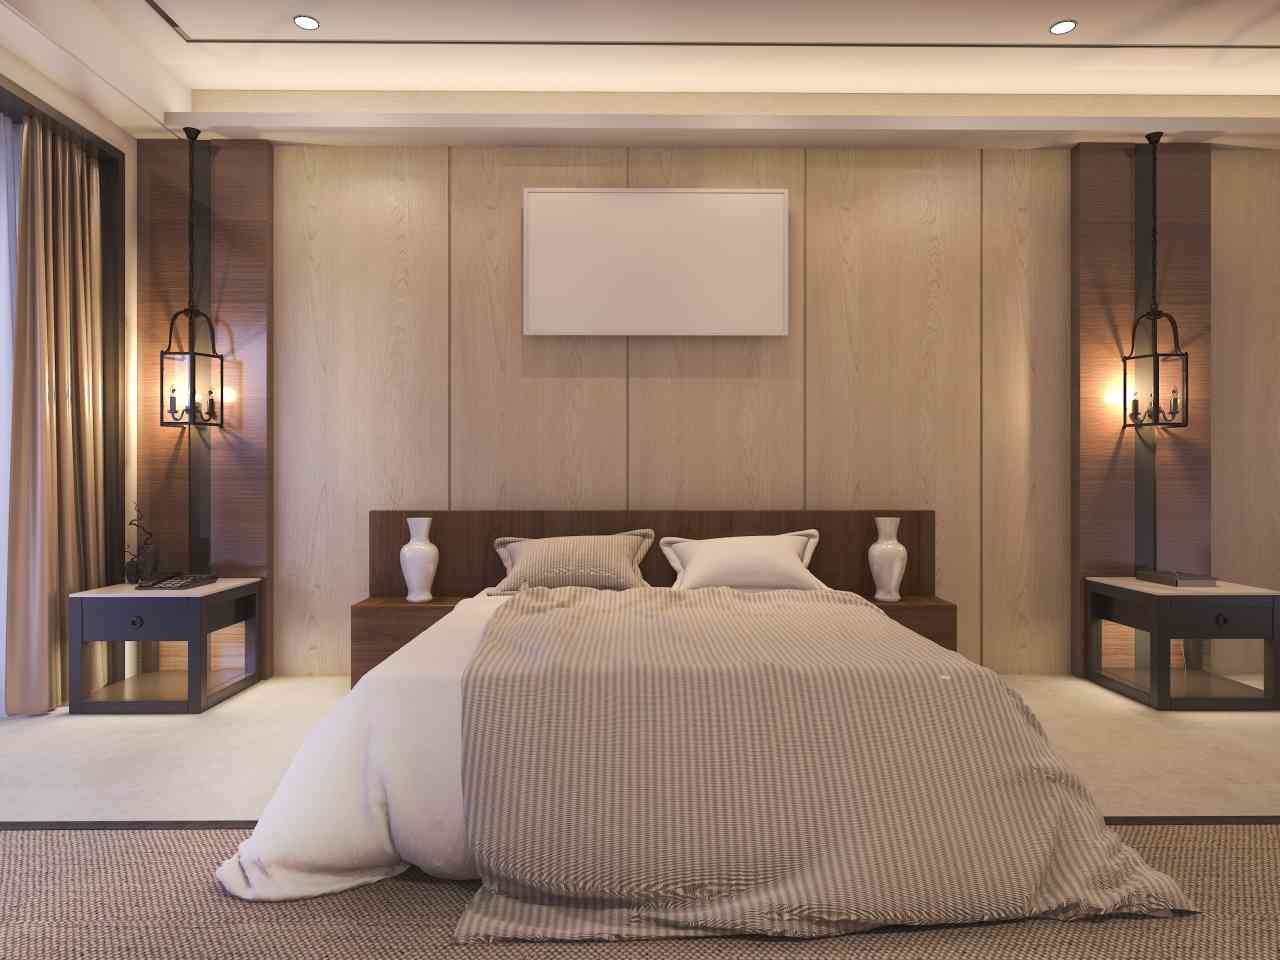 3d-rendering-soft-and-beautiful-bed-in-luxury-bedr-2021-08-28-11-12-12-utc_s.jpg